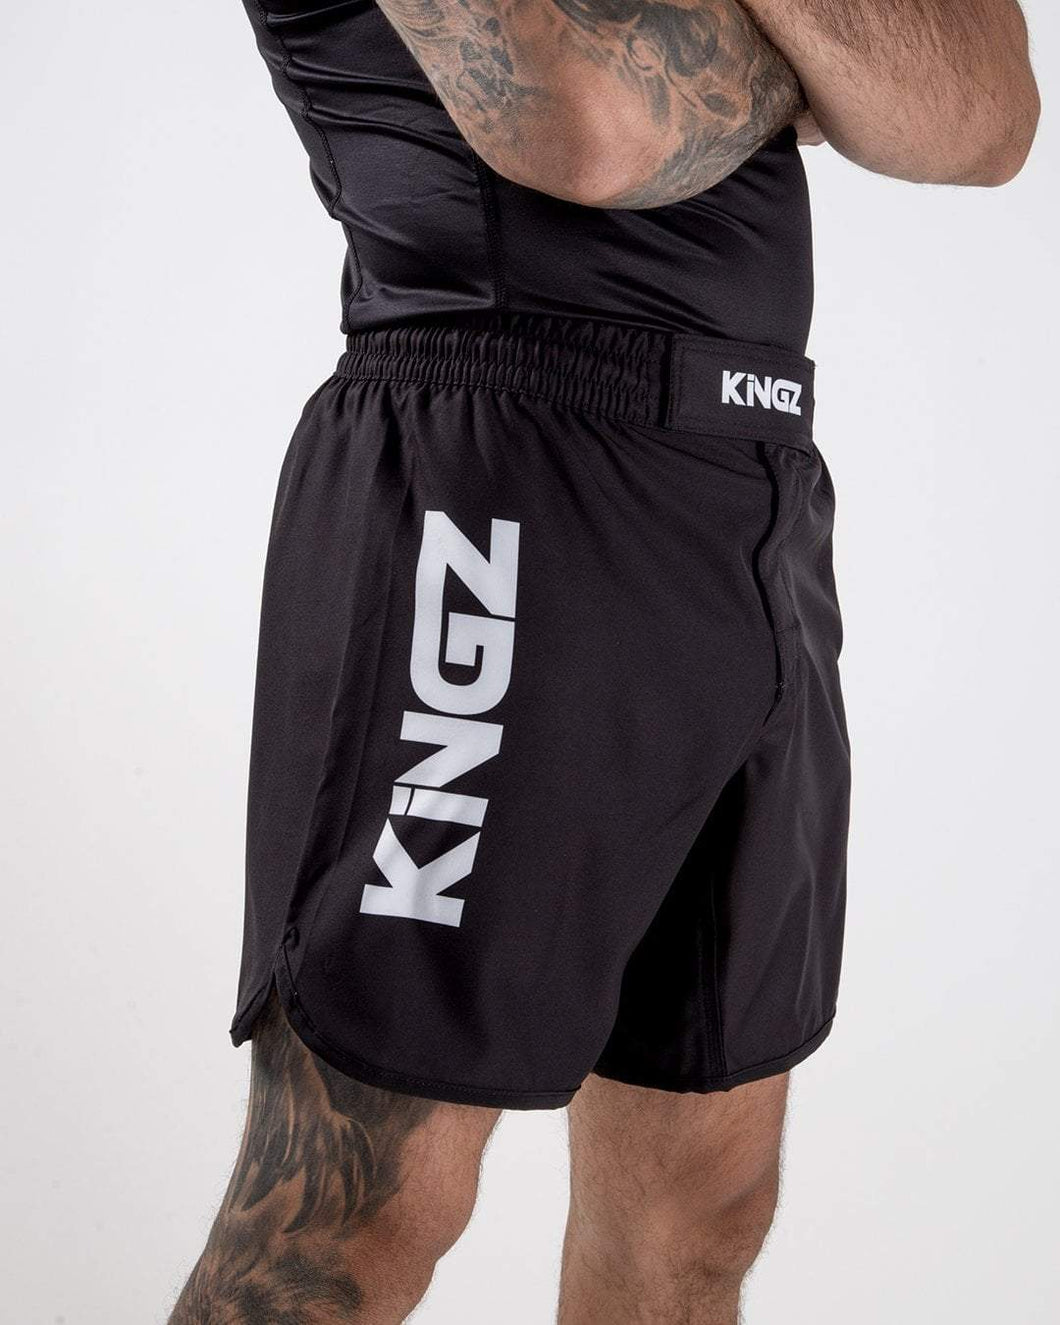 Kingzkore shorts